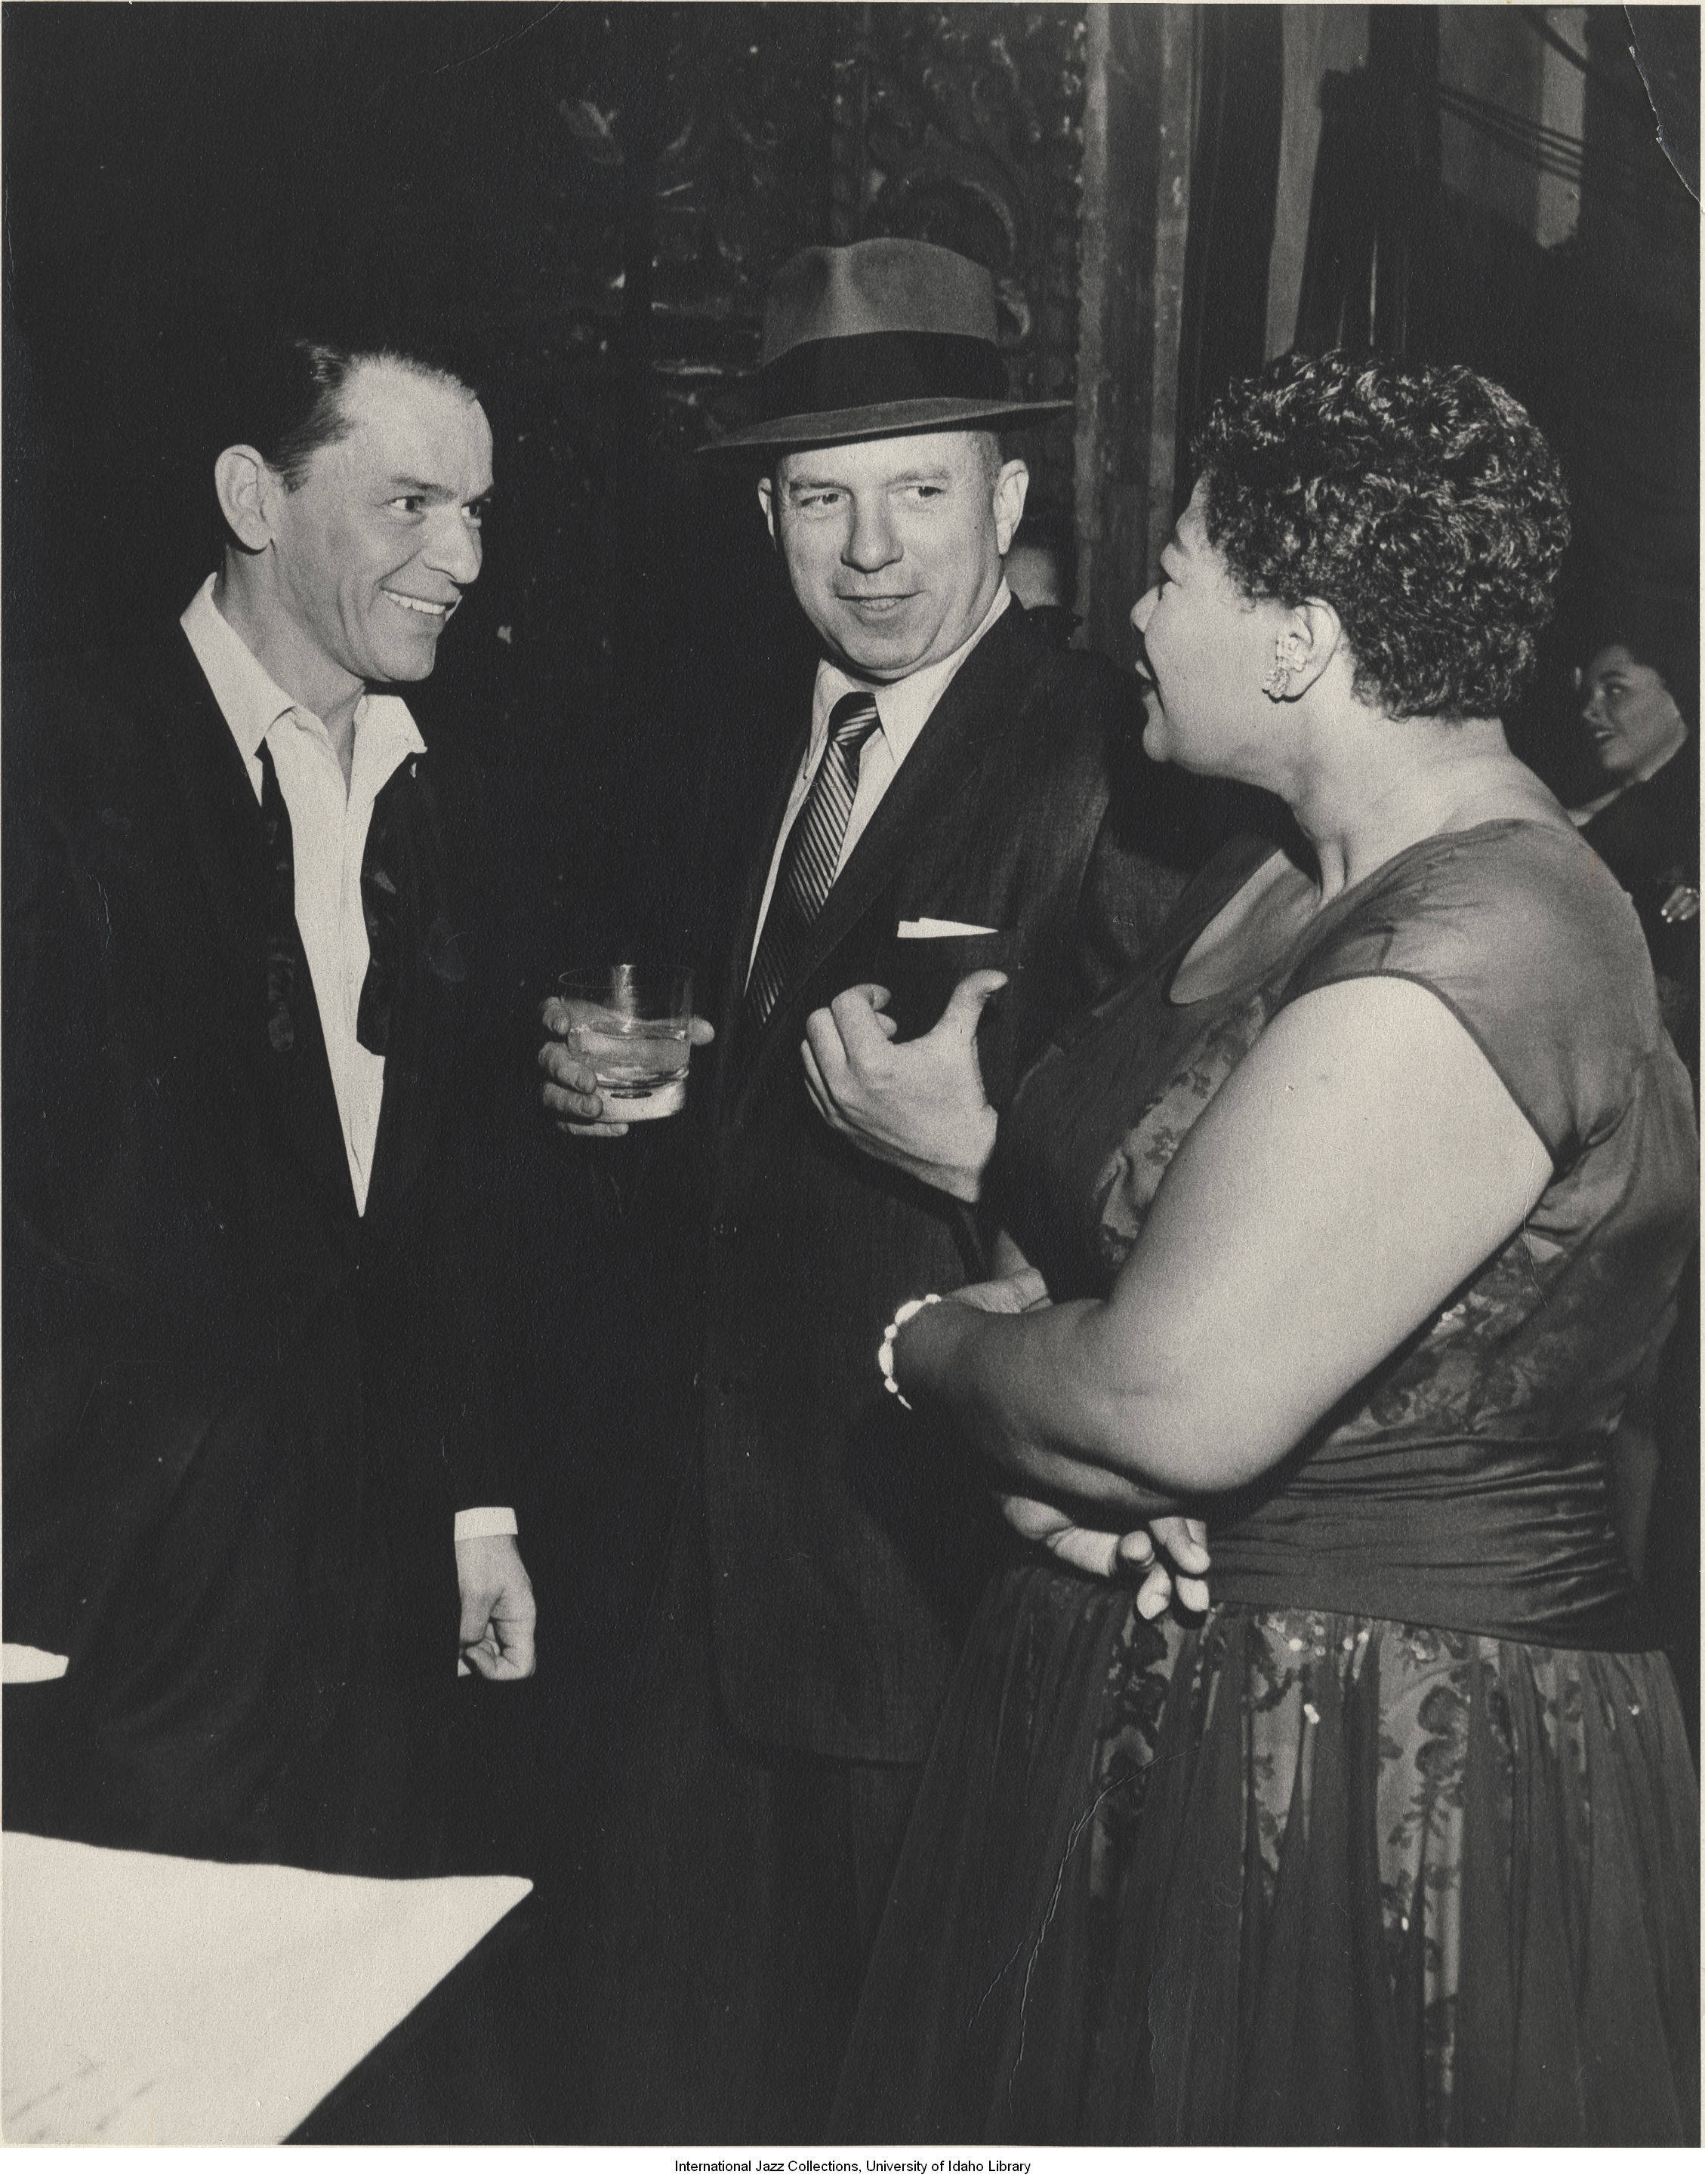 Frank Sinatra accompanied by composer Jimmy Van Heusen